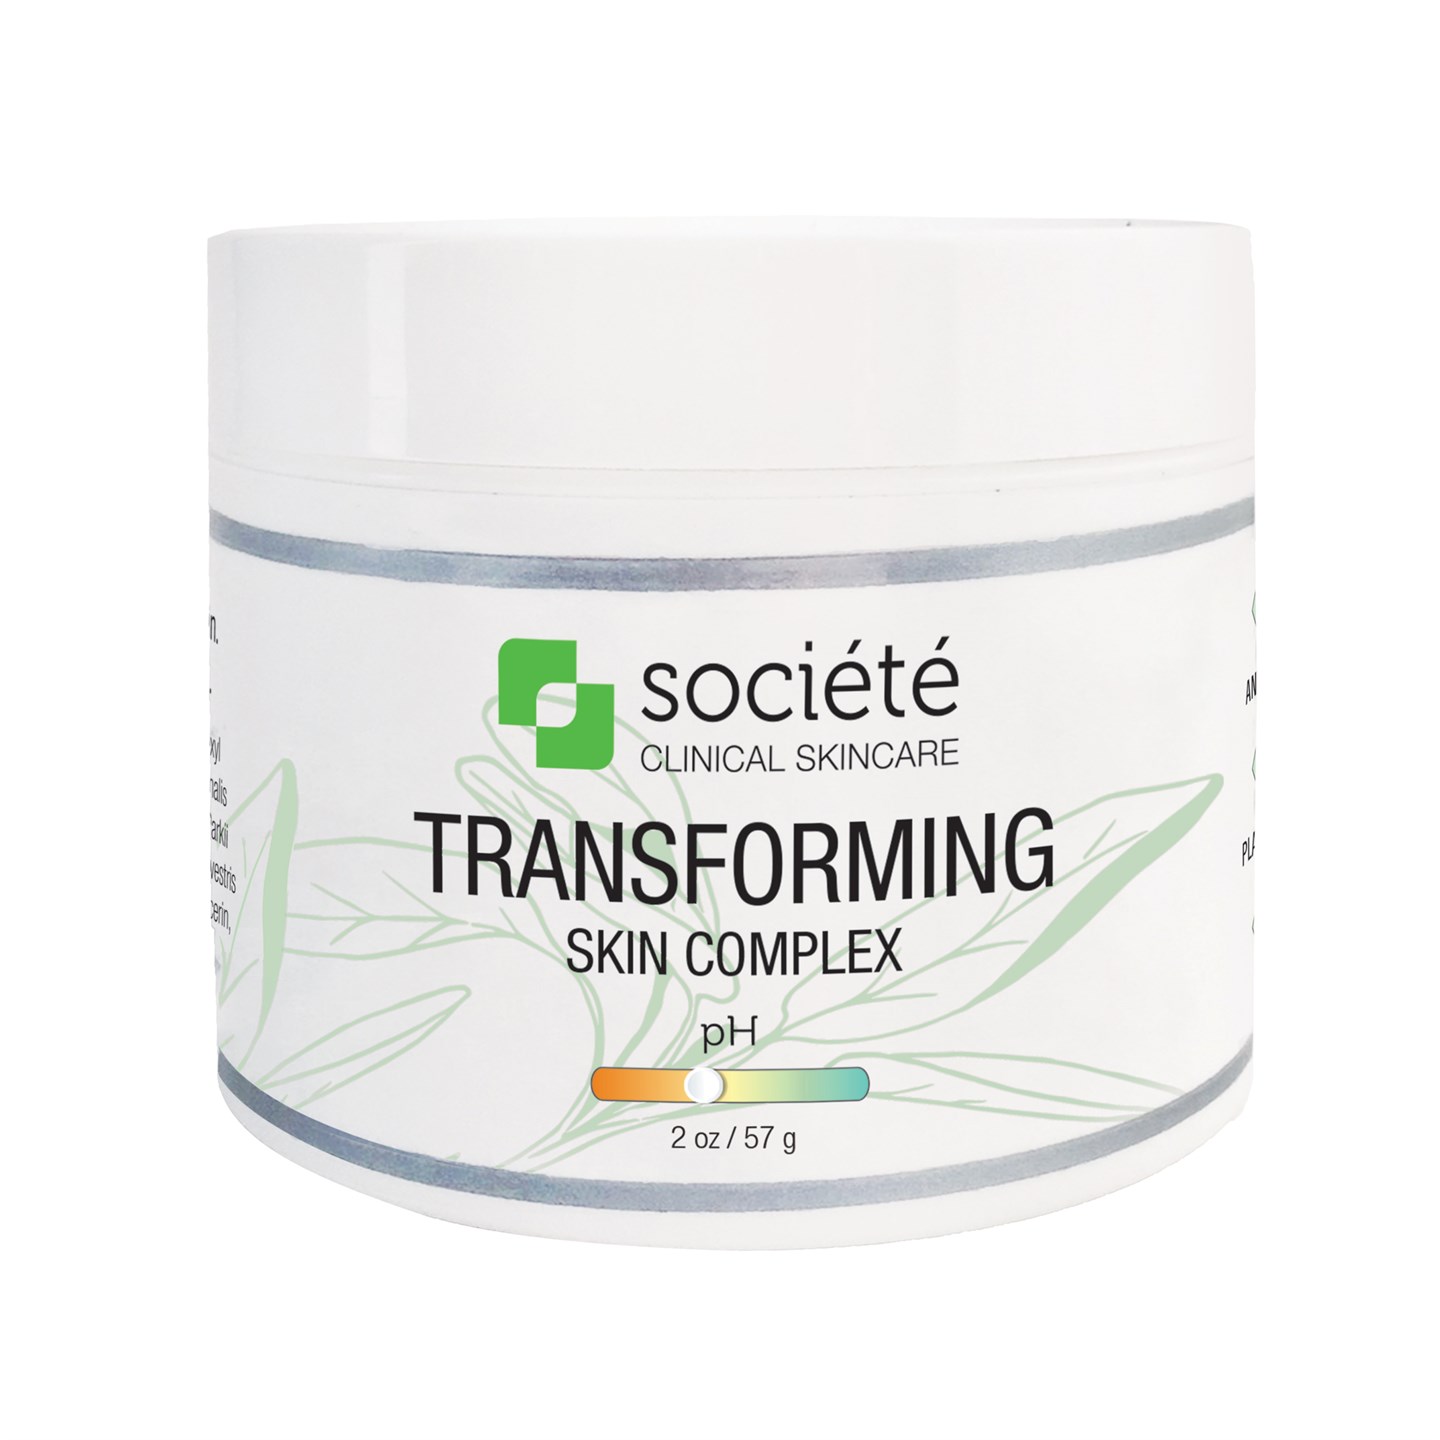 Société TRANSFORMING Skin Complex